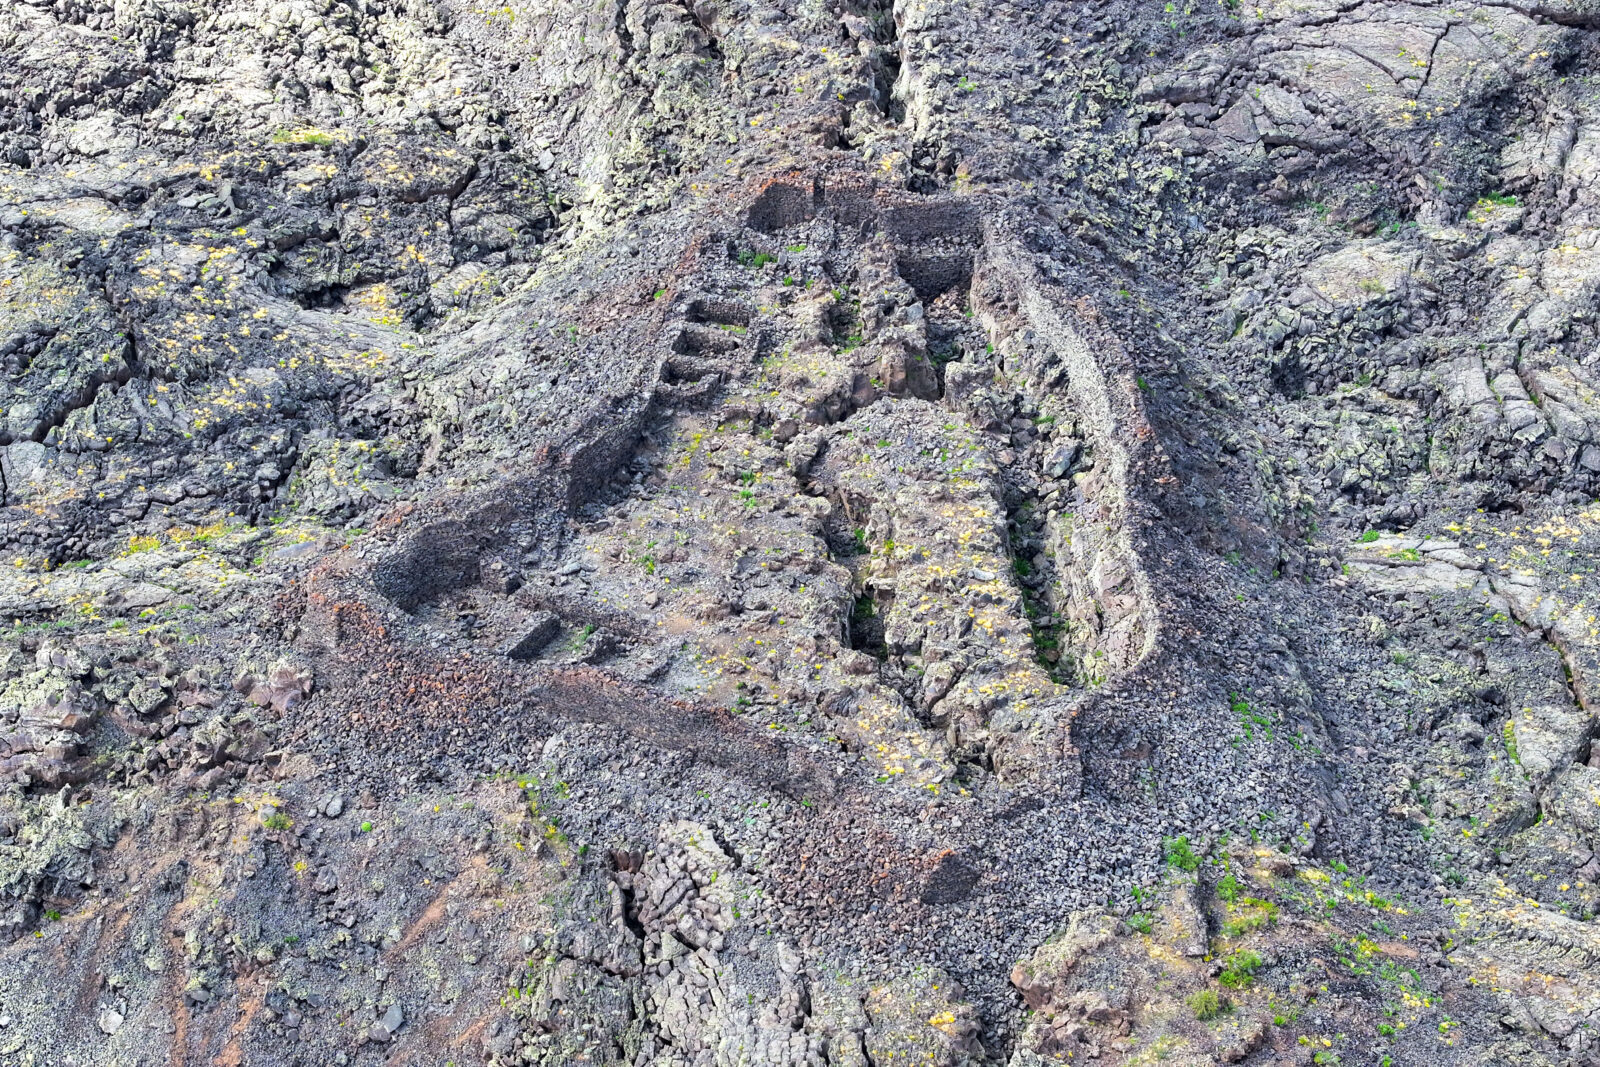 Mysterious medieval castle discovered among lava rocks in Türkiye